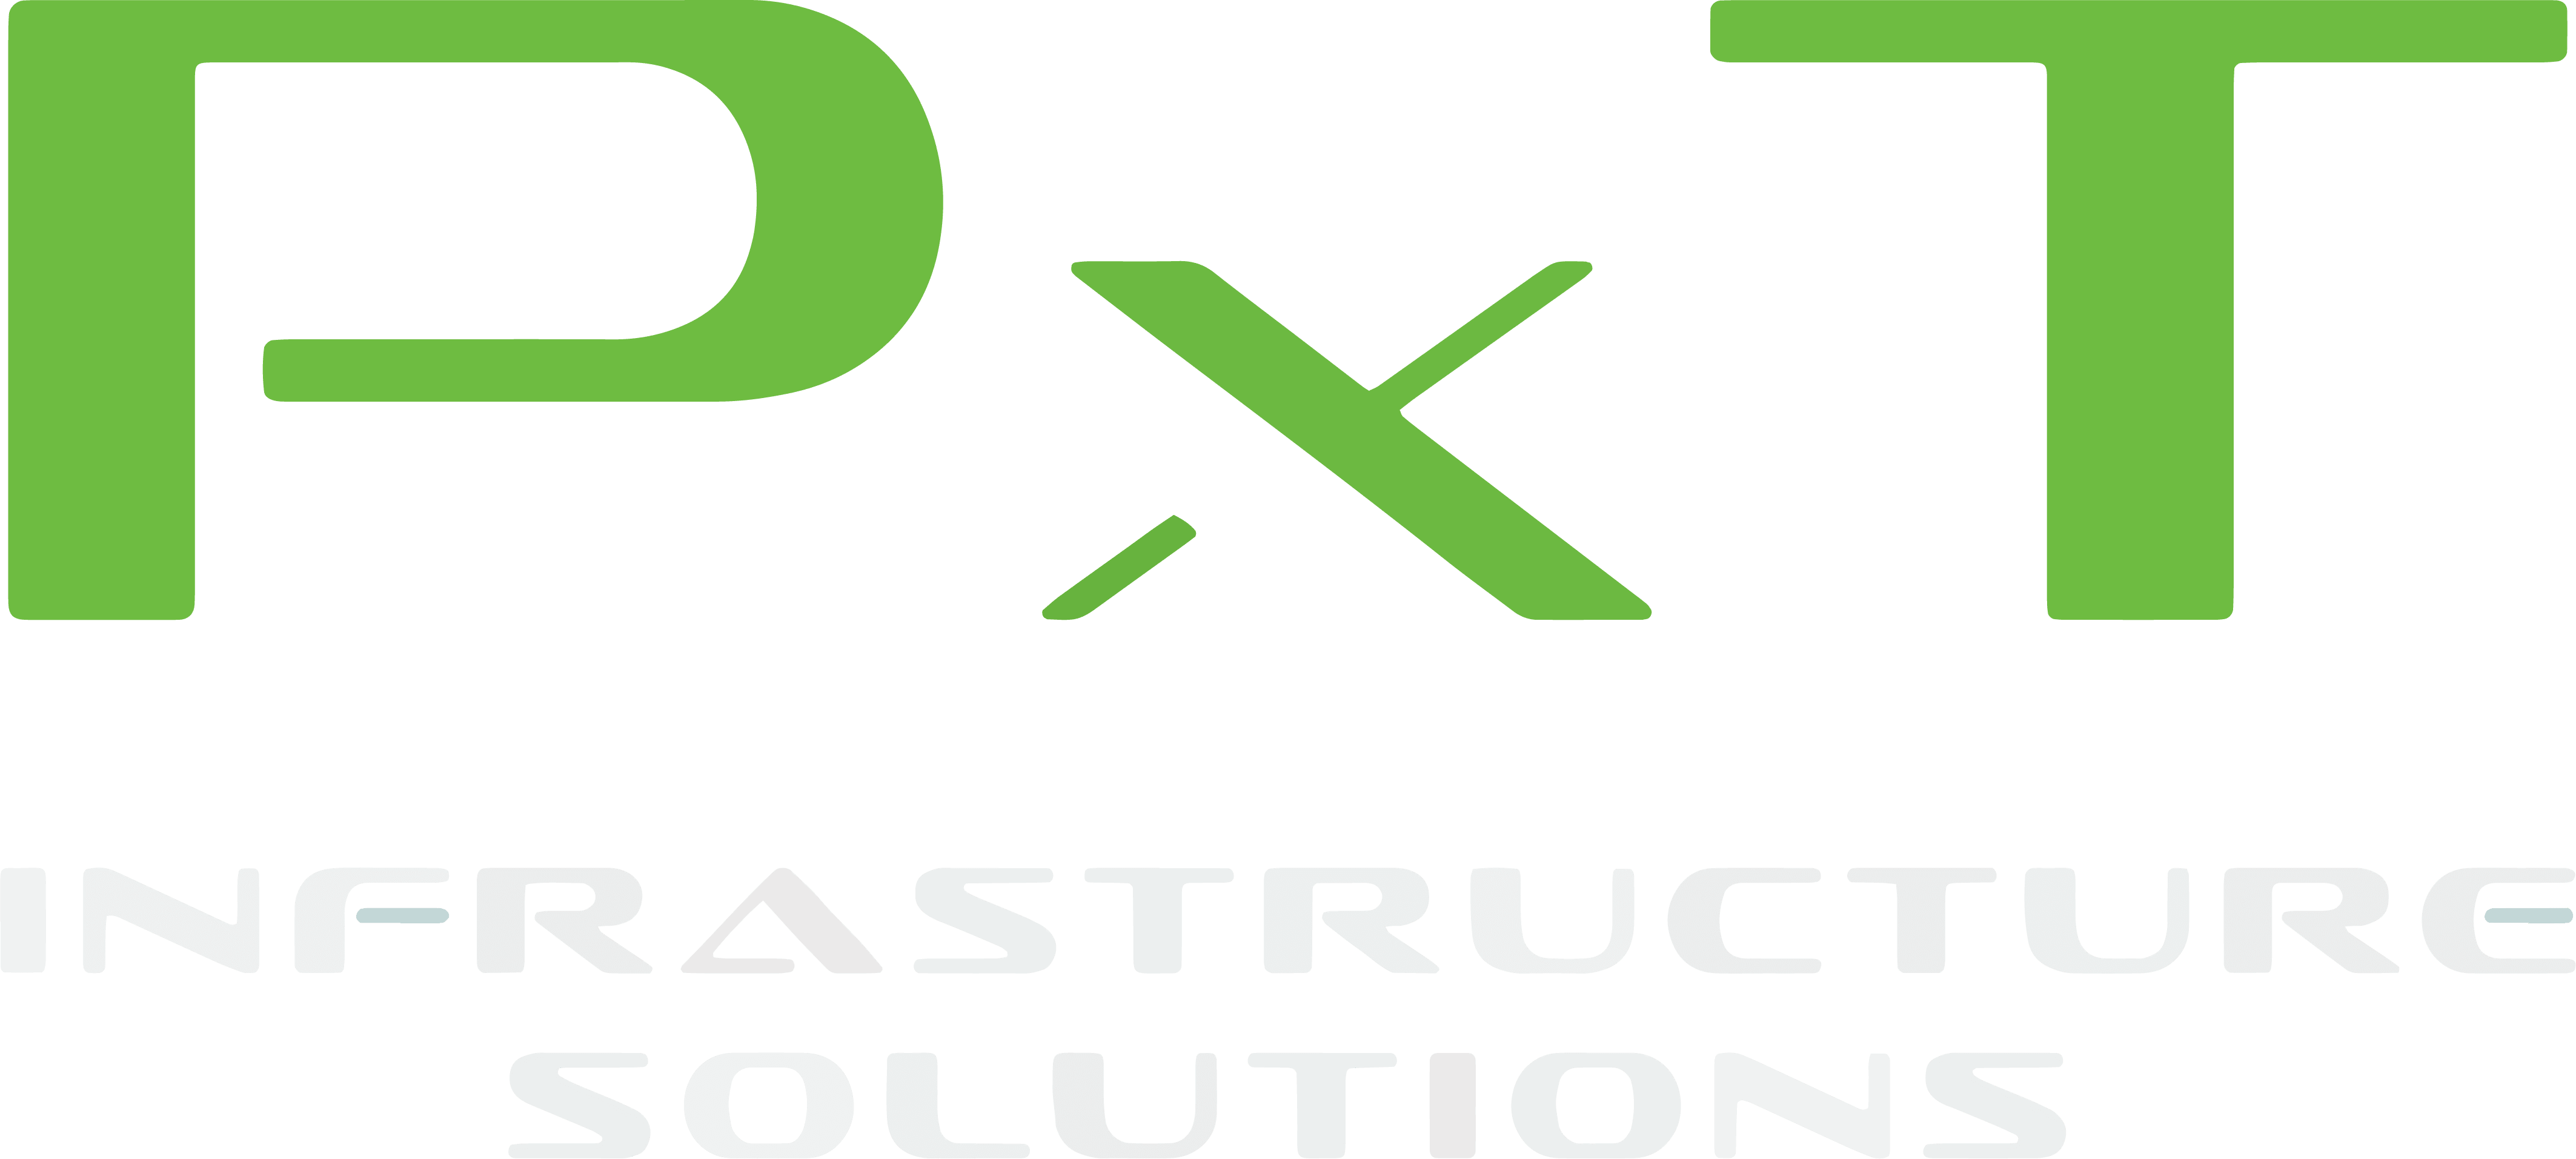 PXT Infrastructure Solution Logo